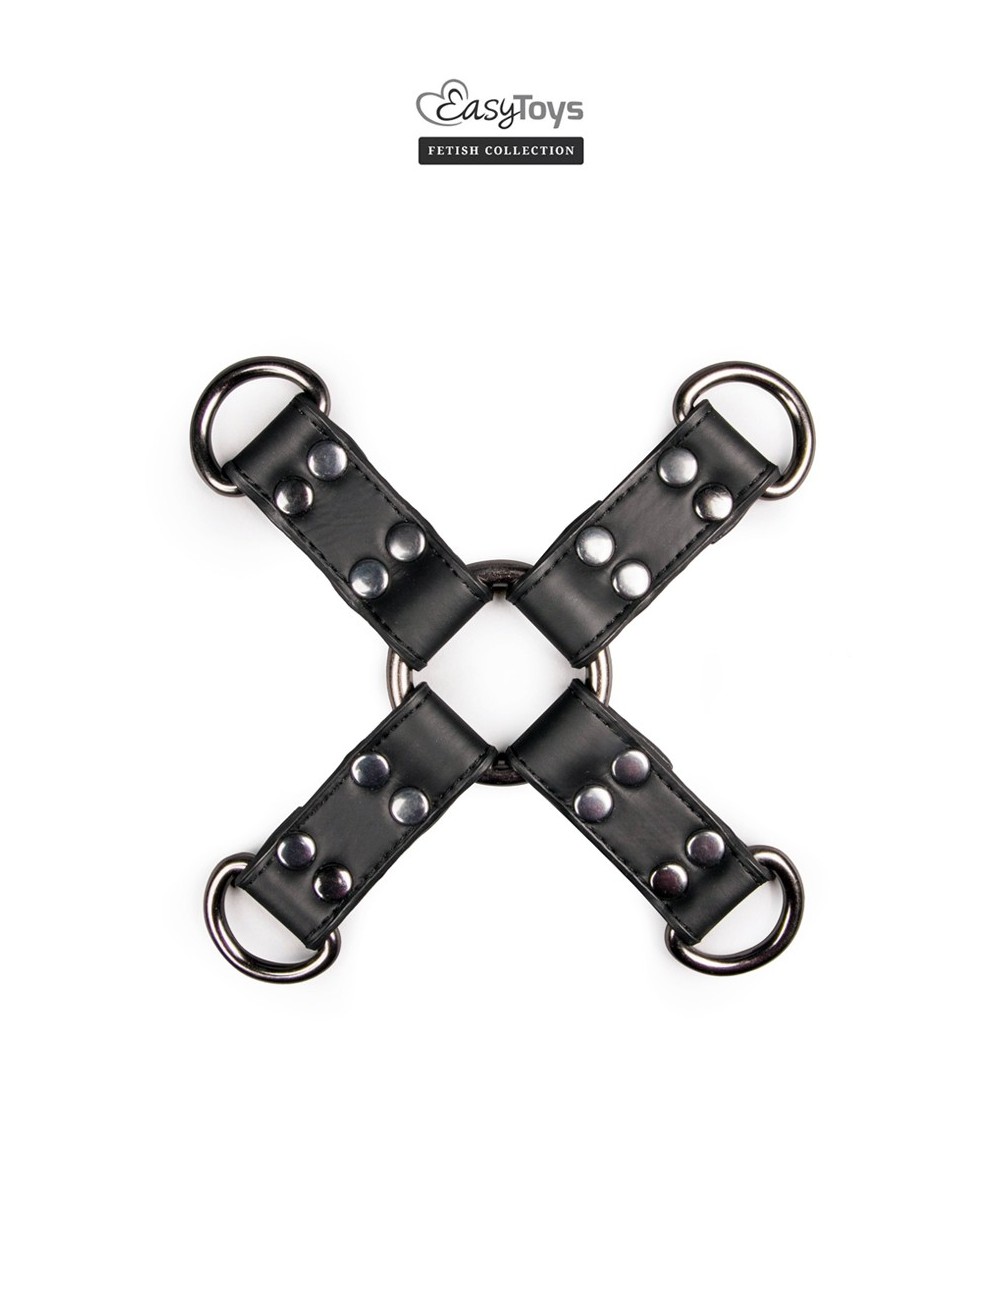 Croix en cuir Hog Tie - Easytoys Fetish Collection